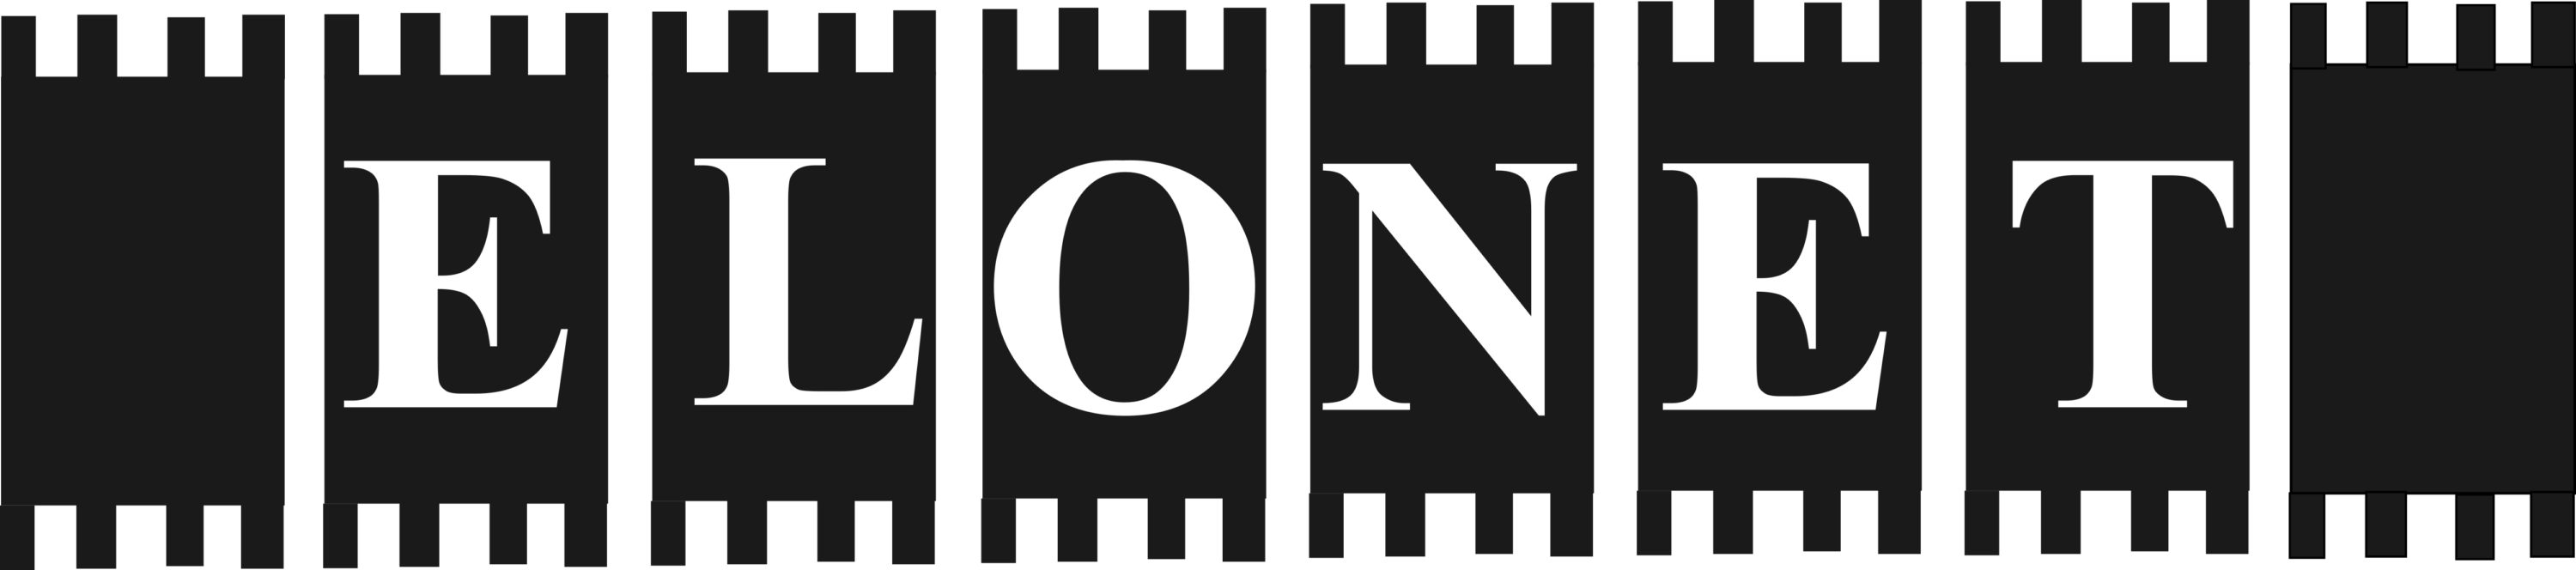 Elonet Logo